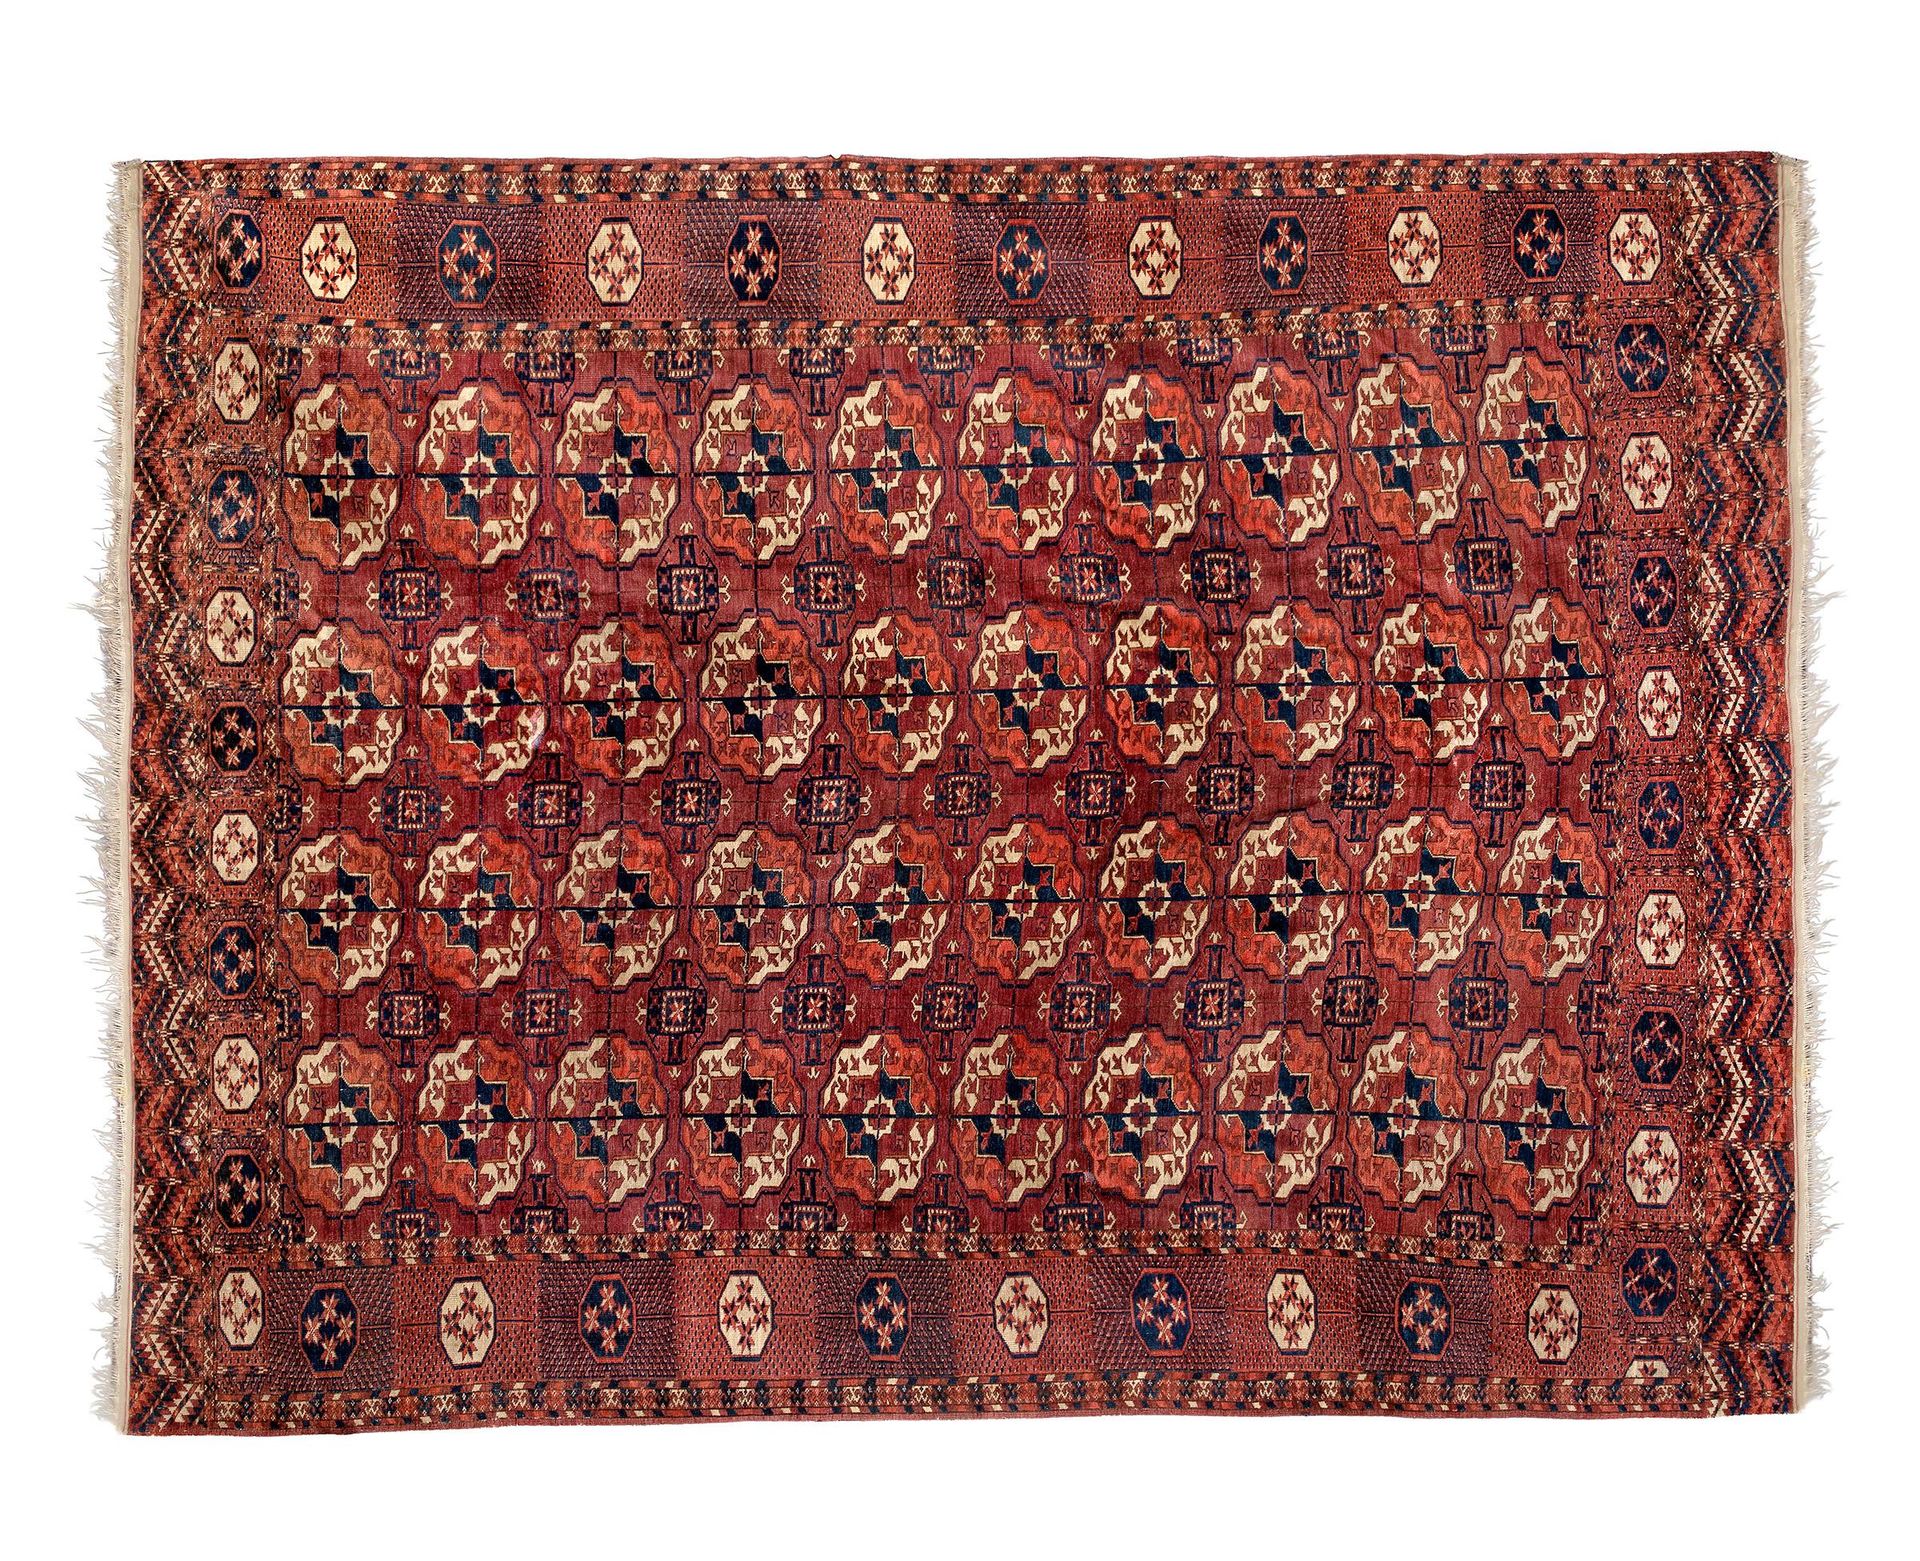 Null 一块古董土耳其地毯，19世纪。
用羊毛打结。500,000结/平方米。
保存状态良好。
需要清洗。
尺寸。290 x 220厘米。
100%羊毛。它有&hellip;